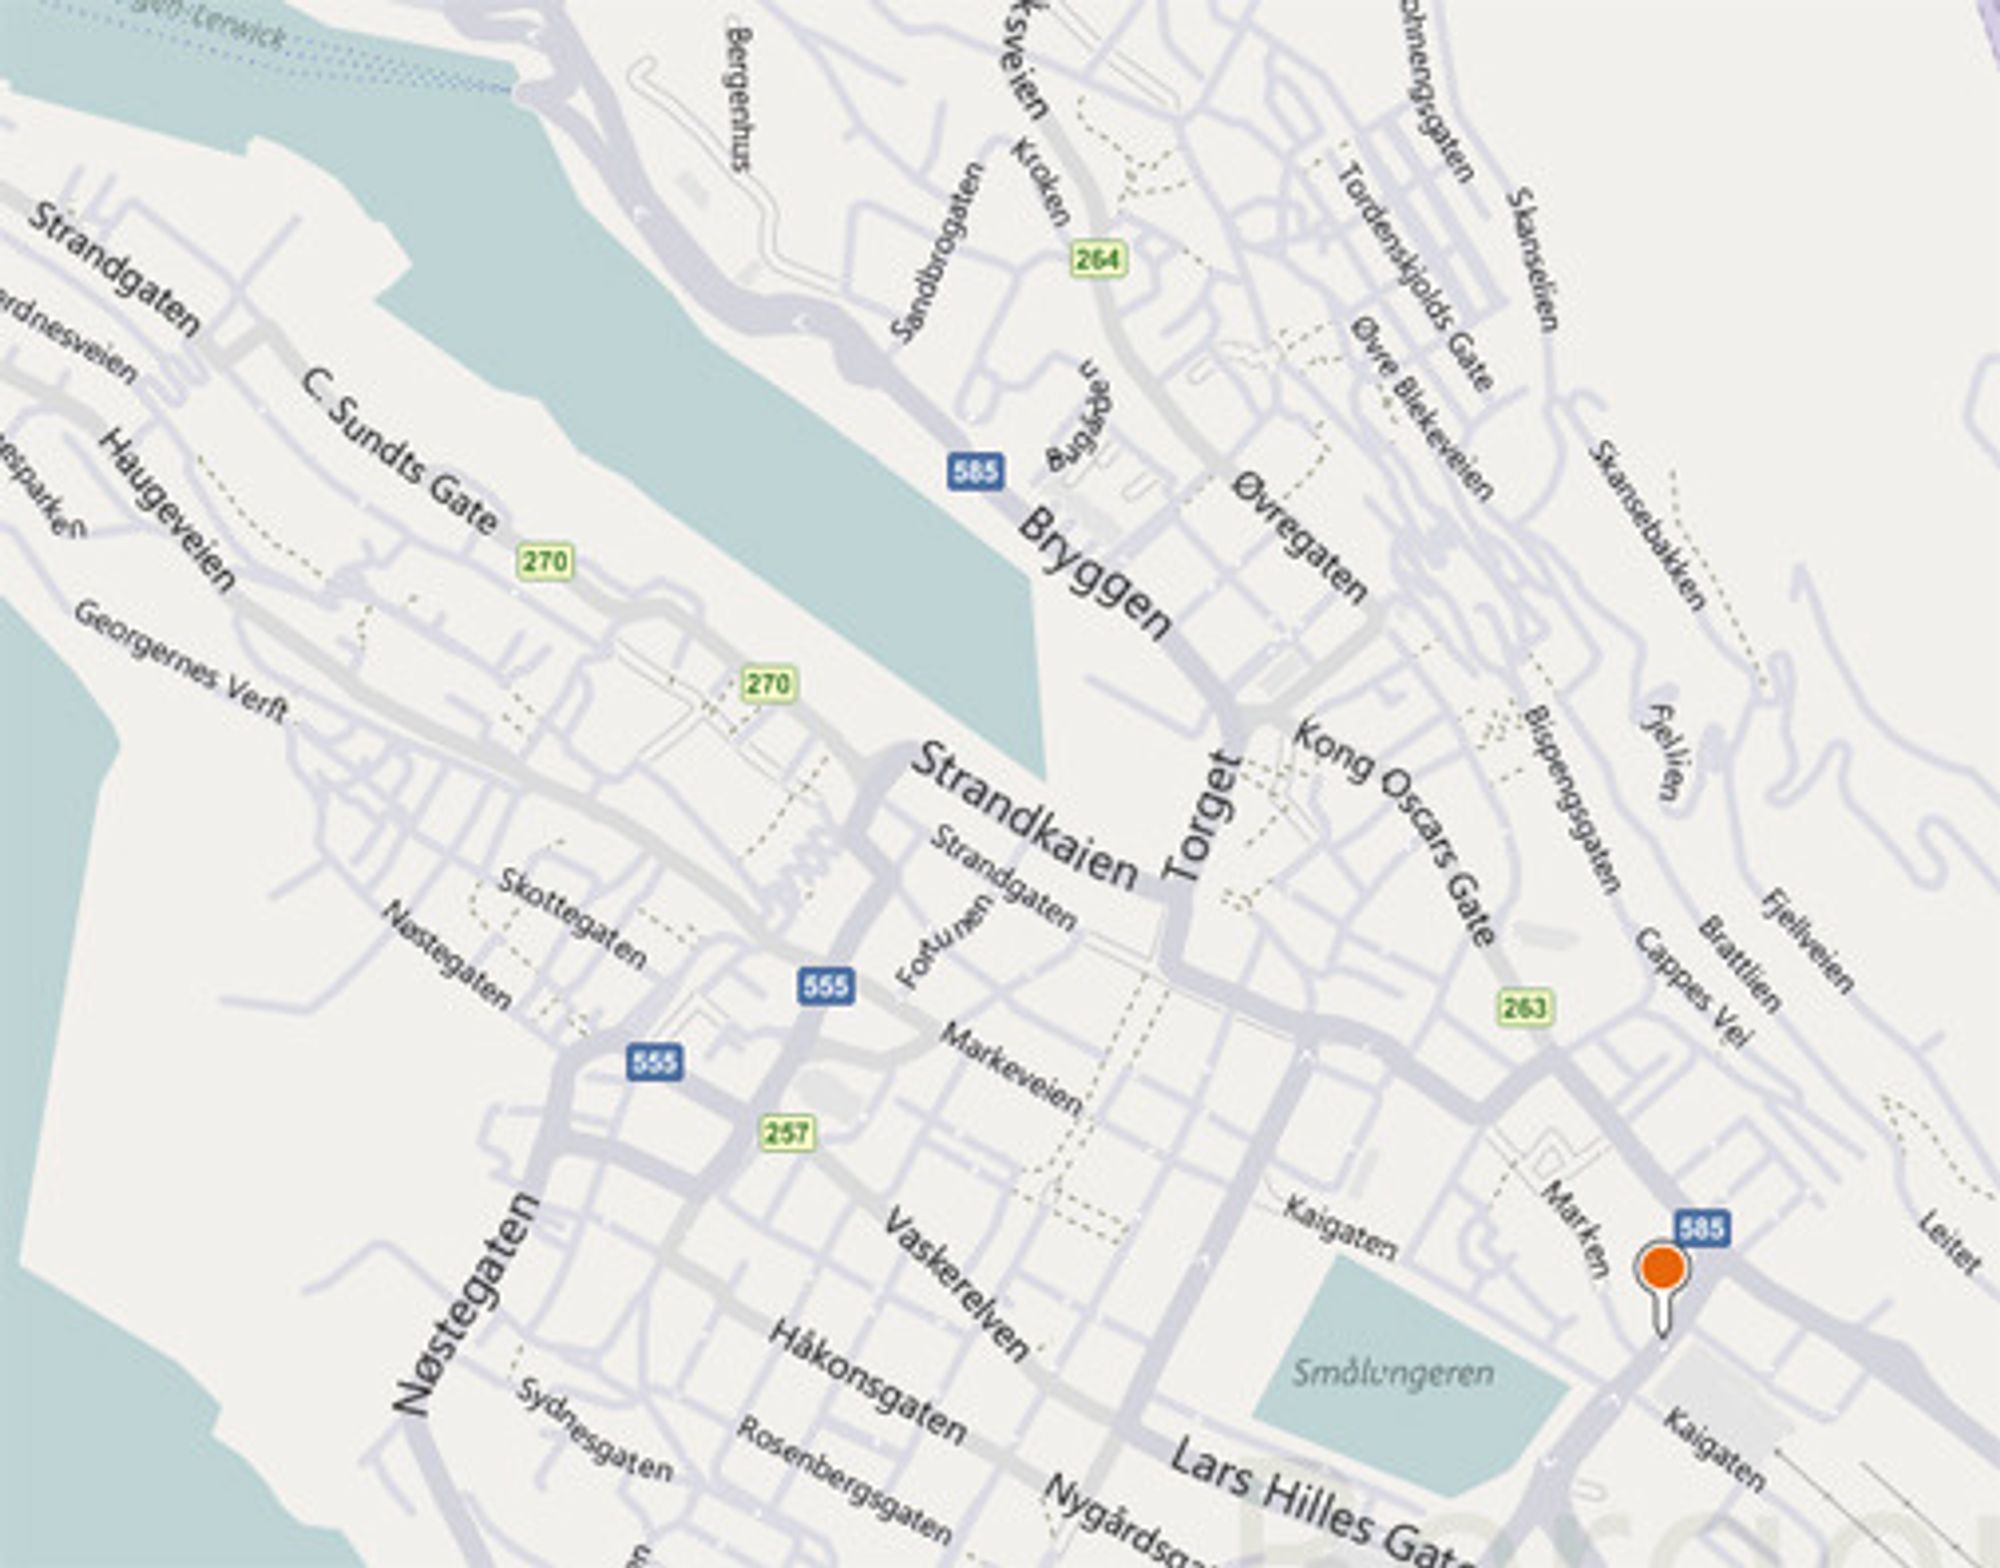 Bergen by er langt mindre detaljert i Microsofts vanlige Bing-kart.